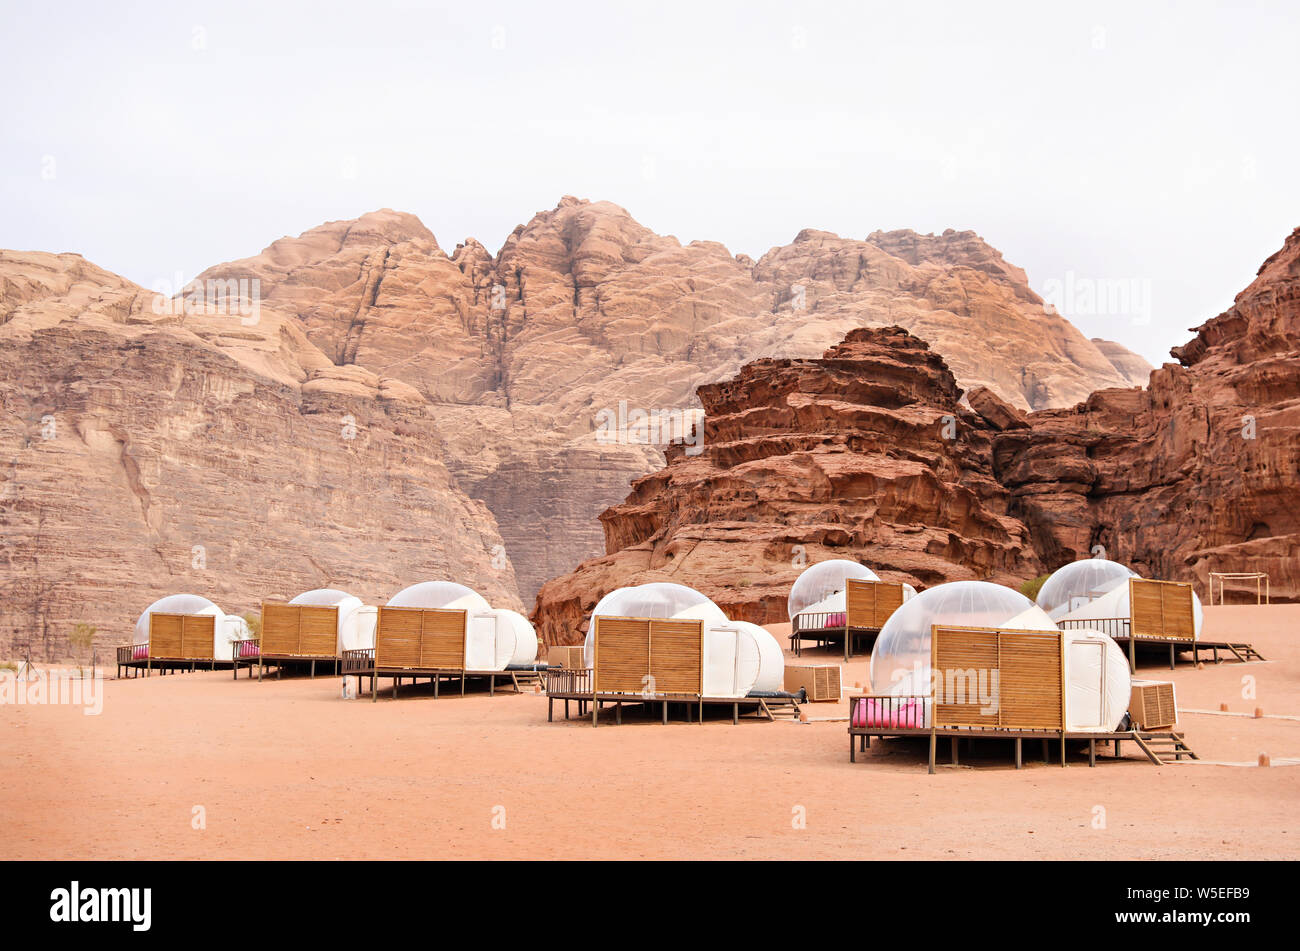 Bubble tents in the desert of Wadi Rum, Jordan Stock Photo - Alamy